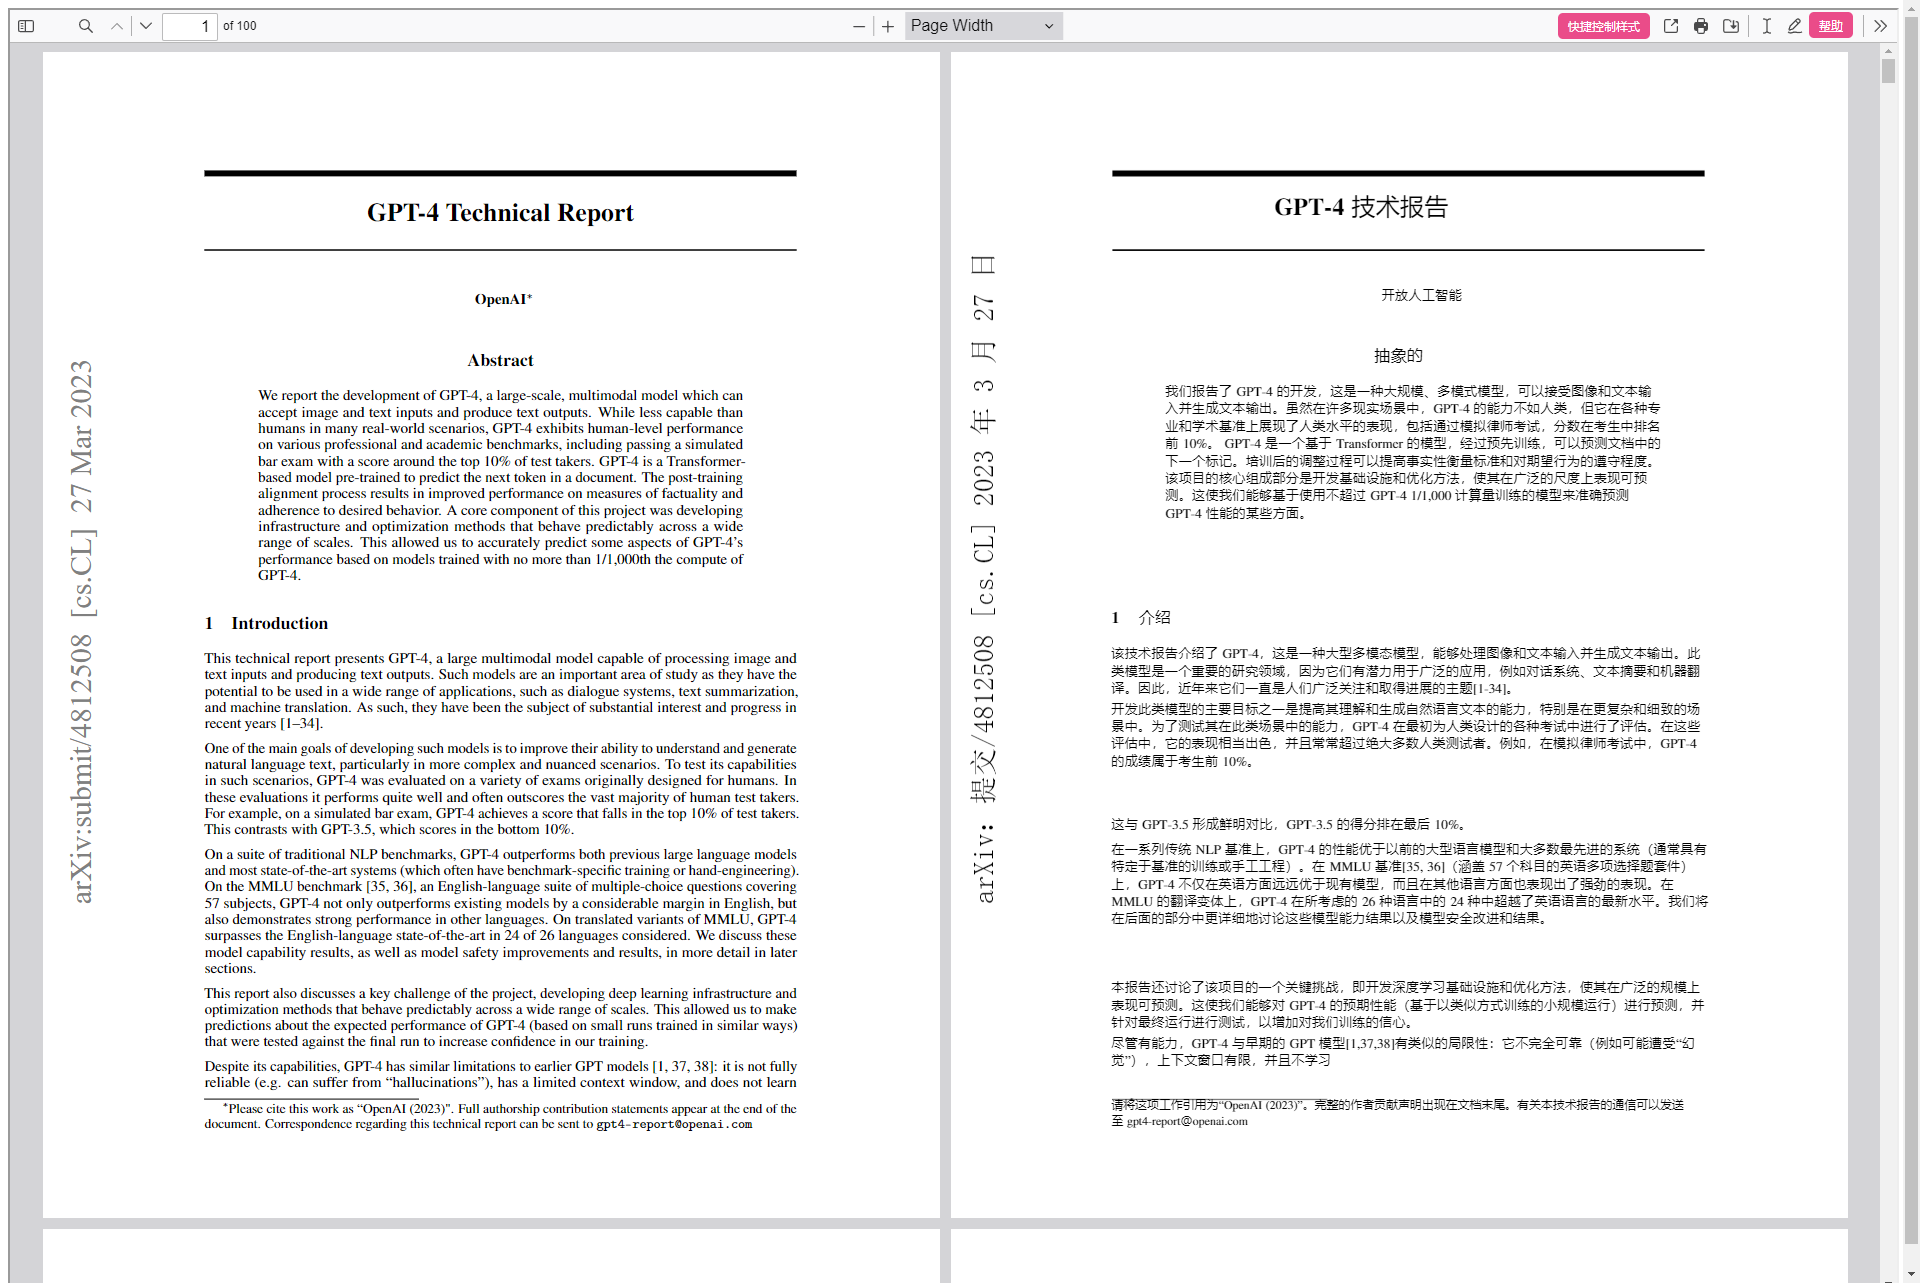 Translating the GPT-4 paper